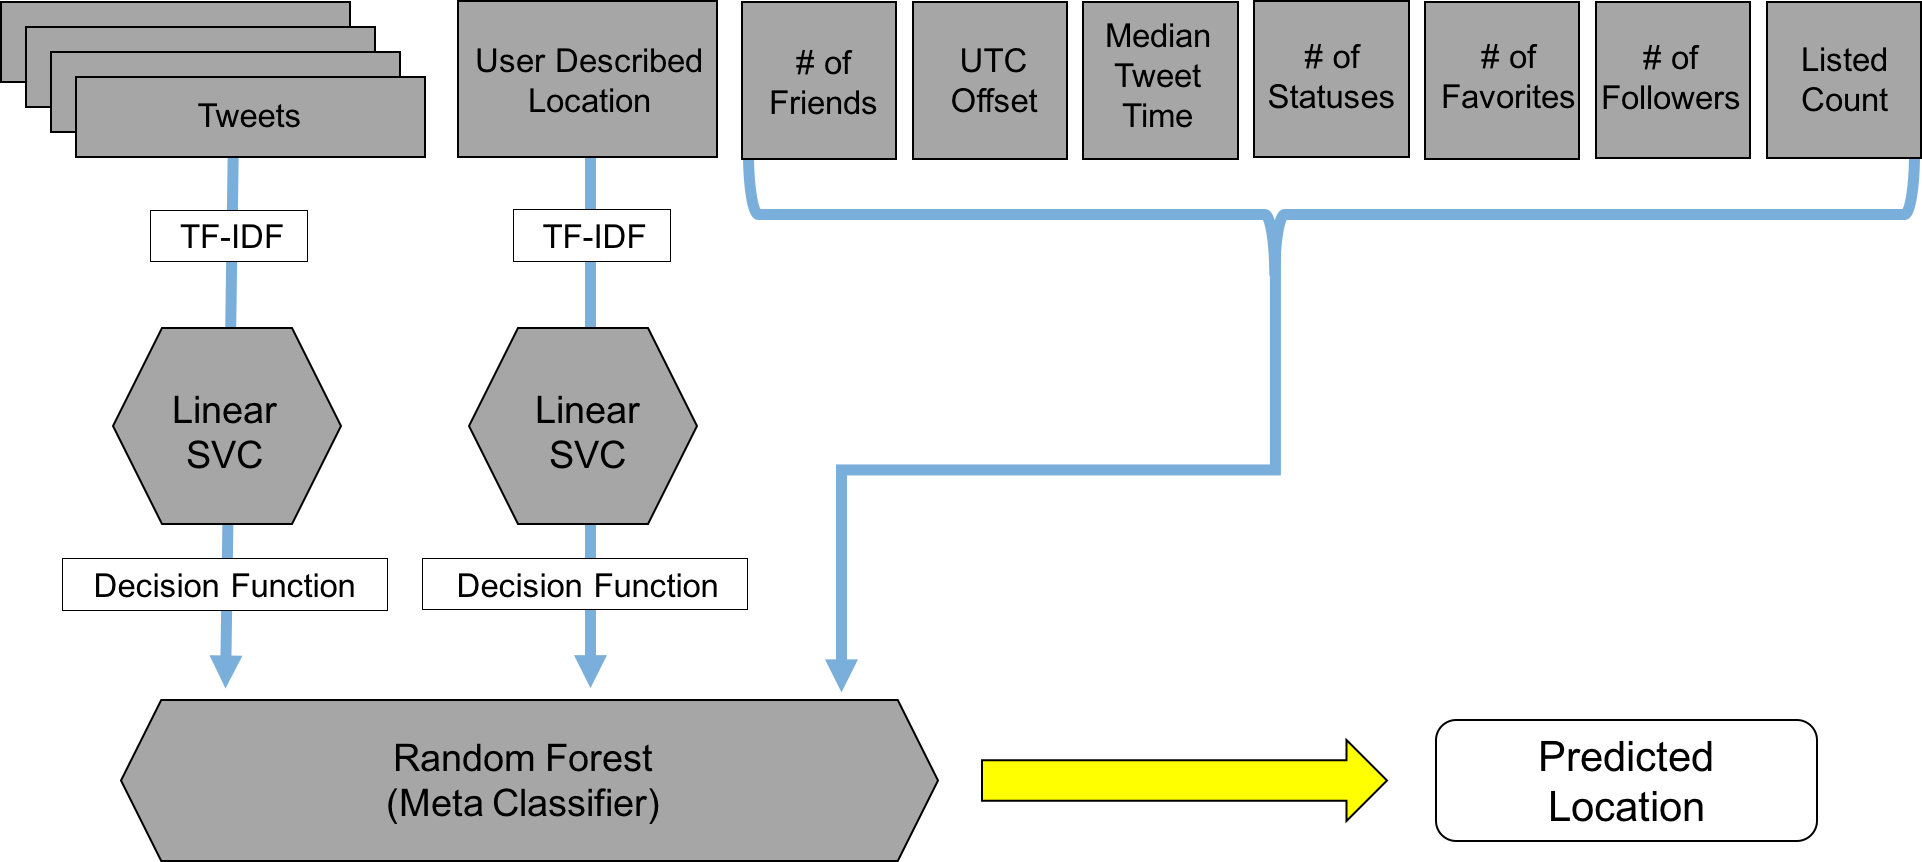 model_diagram